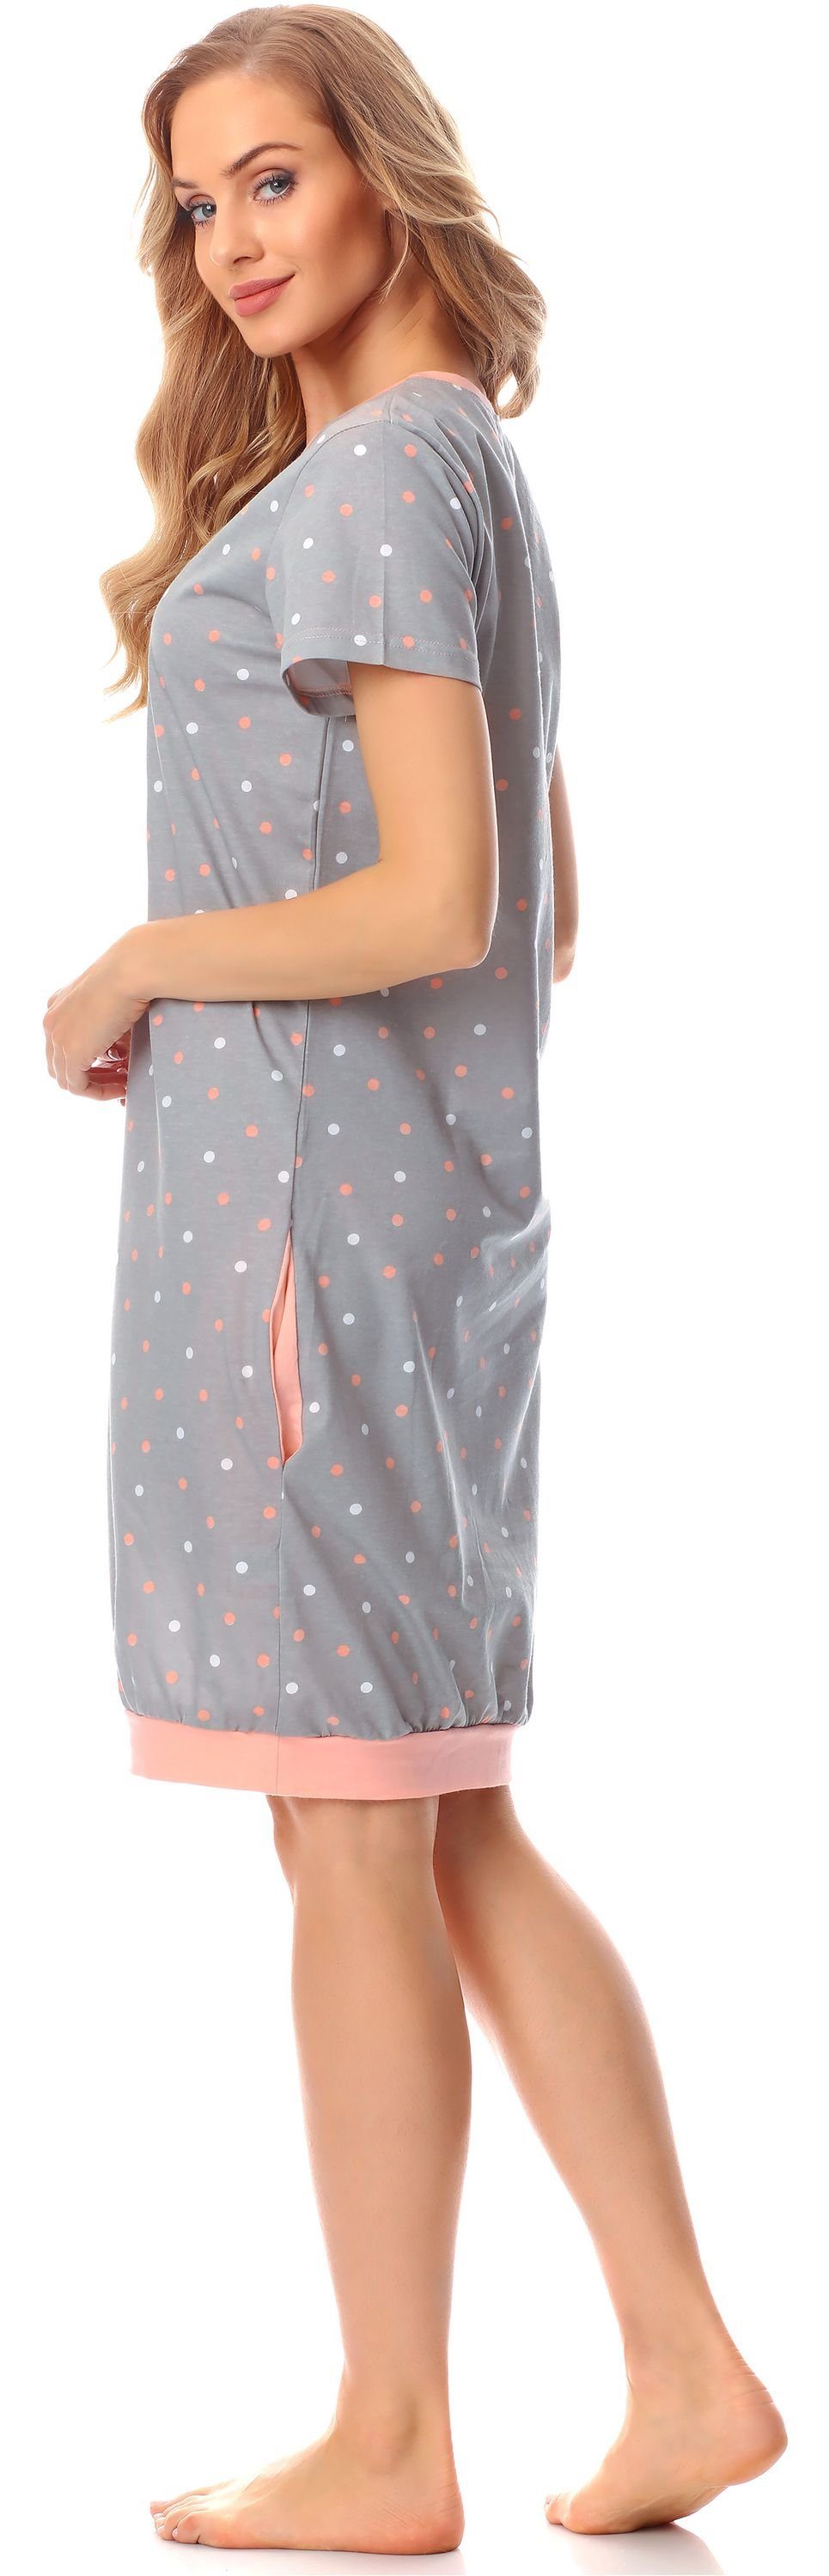 MS10-184 Grau/Punkten Merry Nachthemd Damen Nachthemd Style (1-tlg)